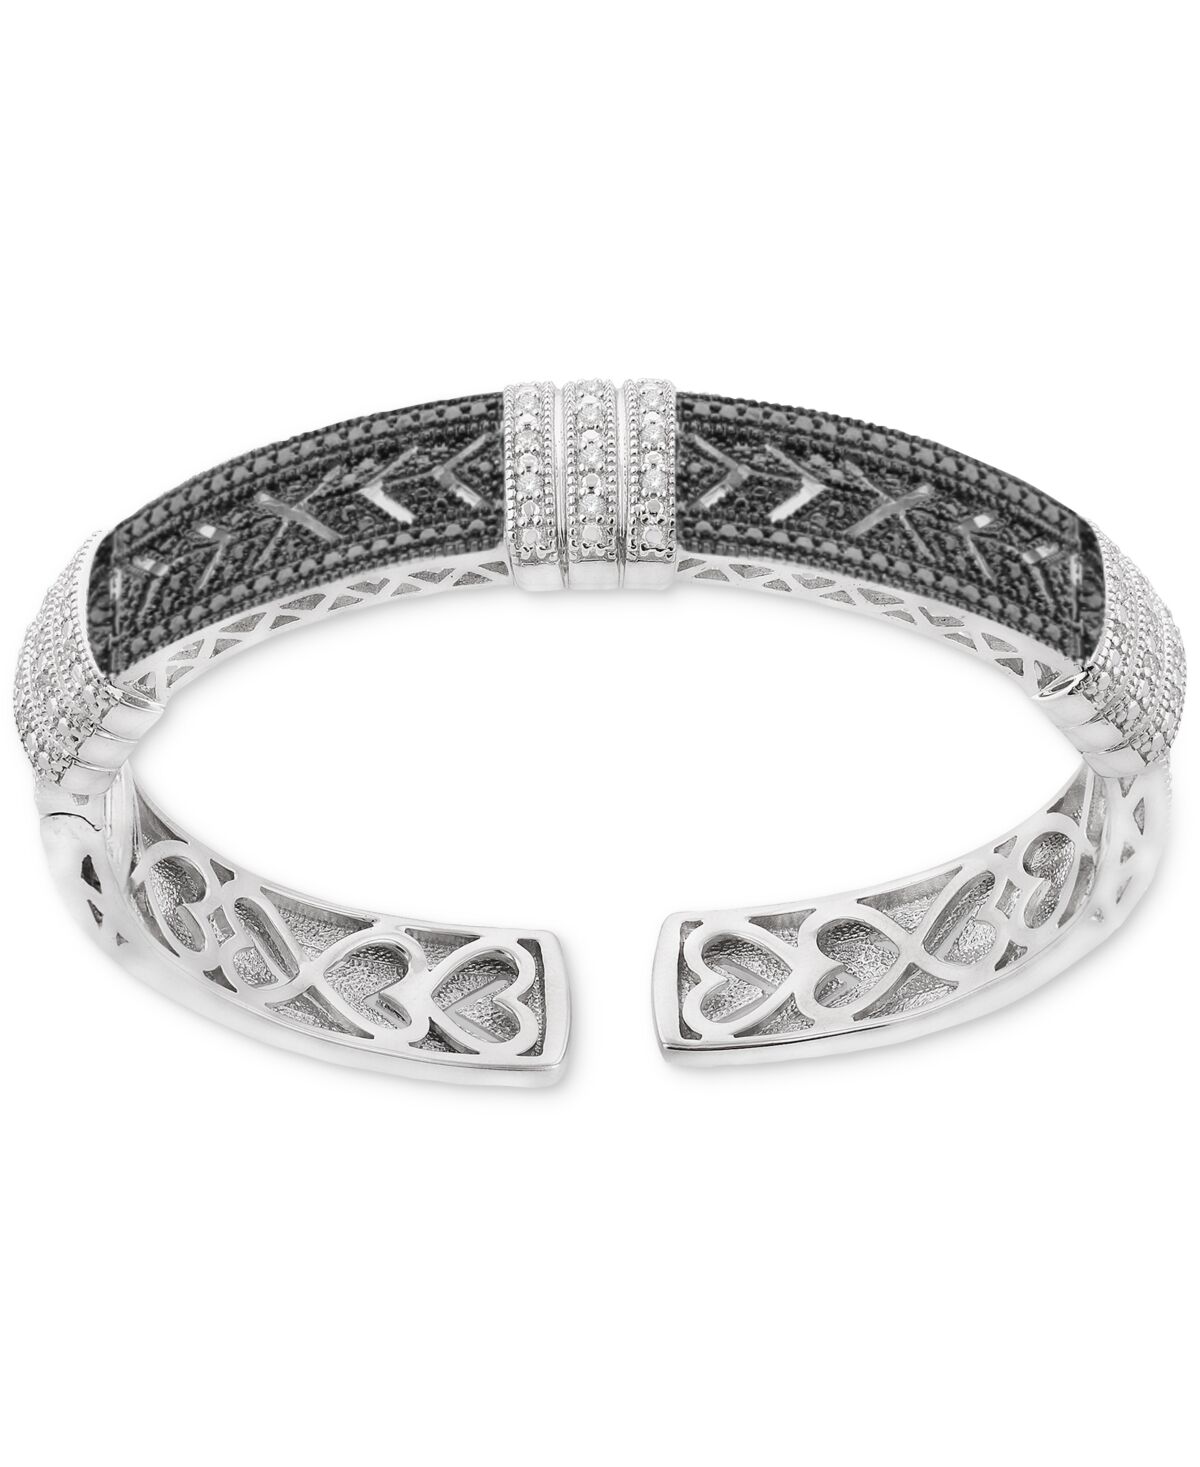 Macy's Diamond Cuff Bangle Bracelet (1/4 ct. t.w.) in Sterling Silver & Black Rhodium-Plate - Sterling Silver